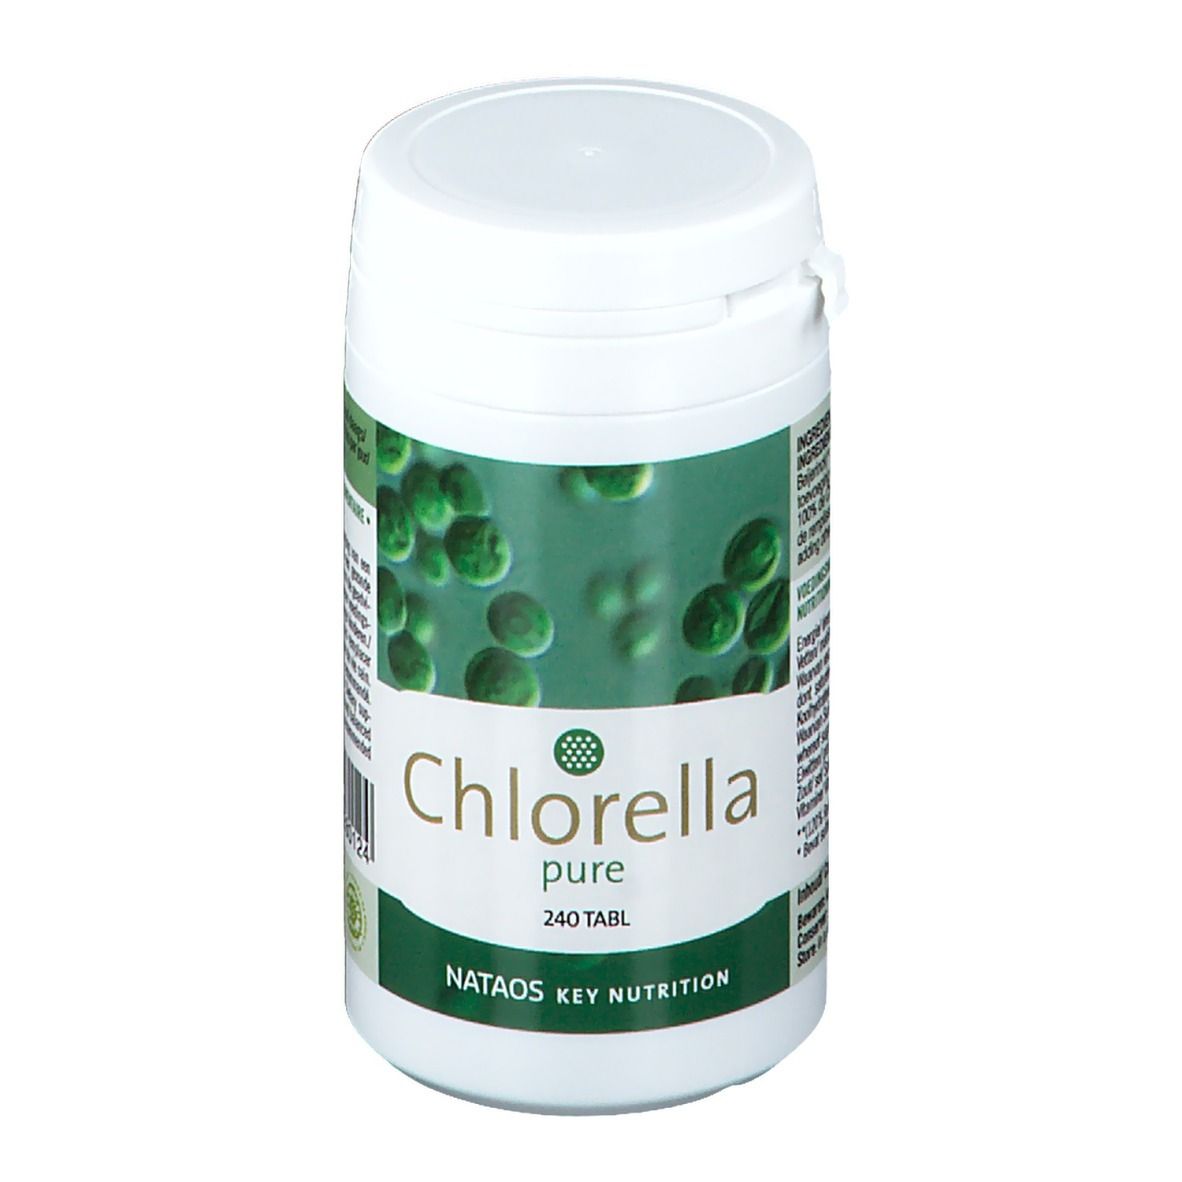 Nataos Key Nutrition Chlorella pure Taletten